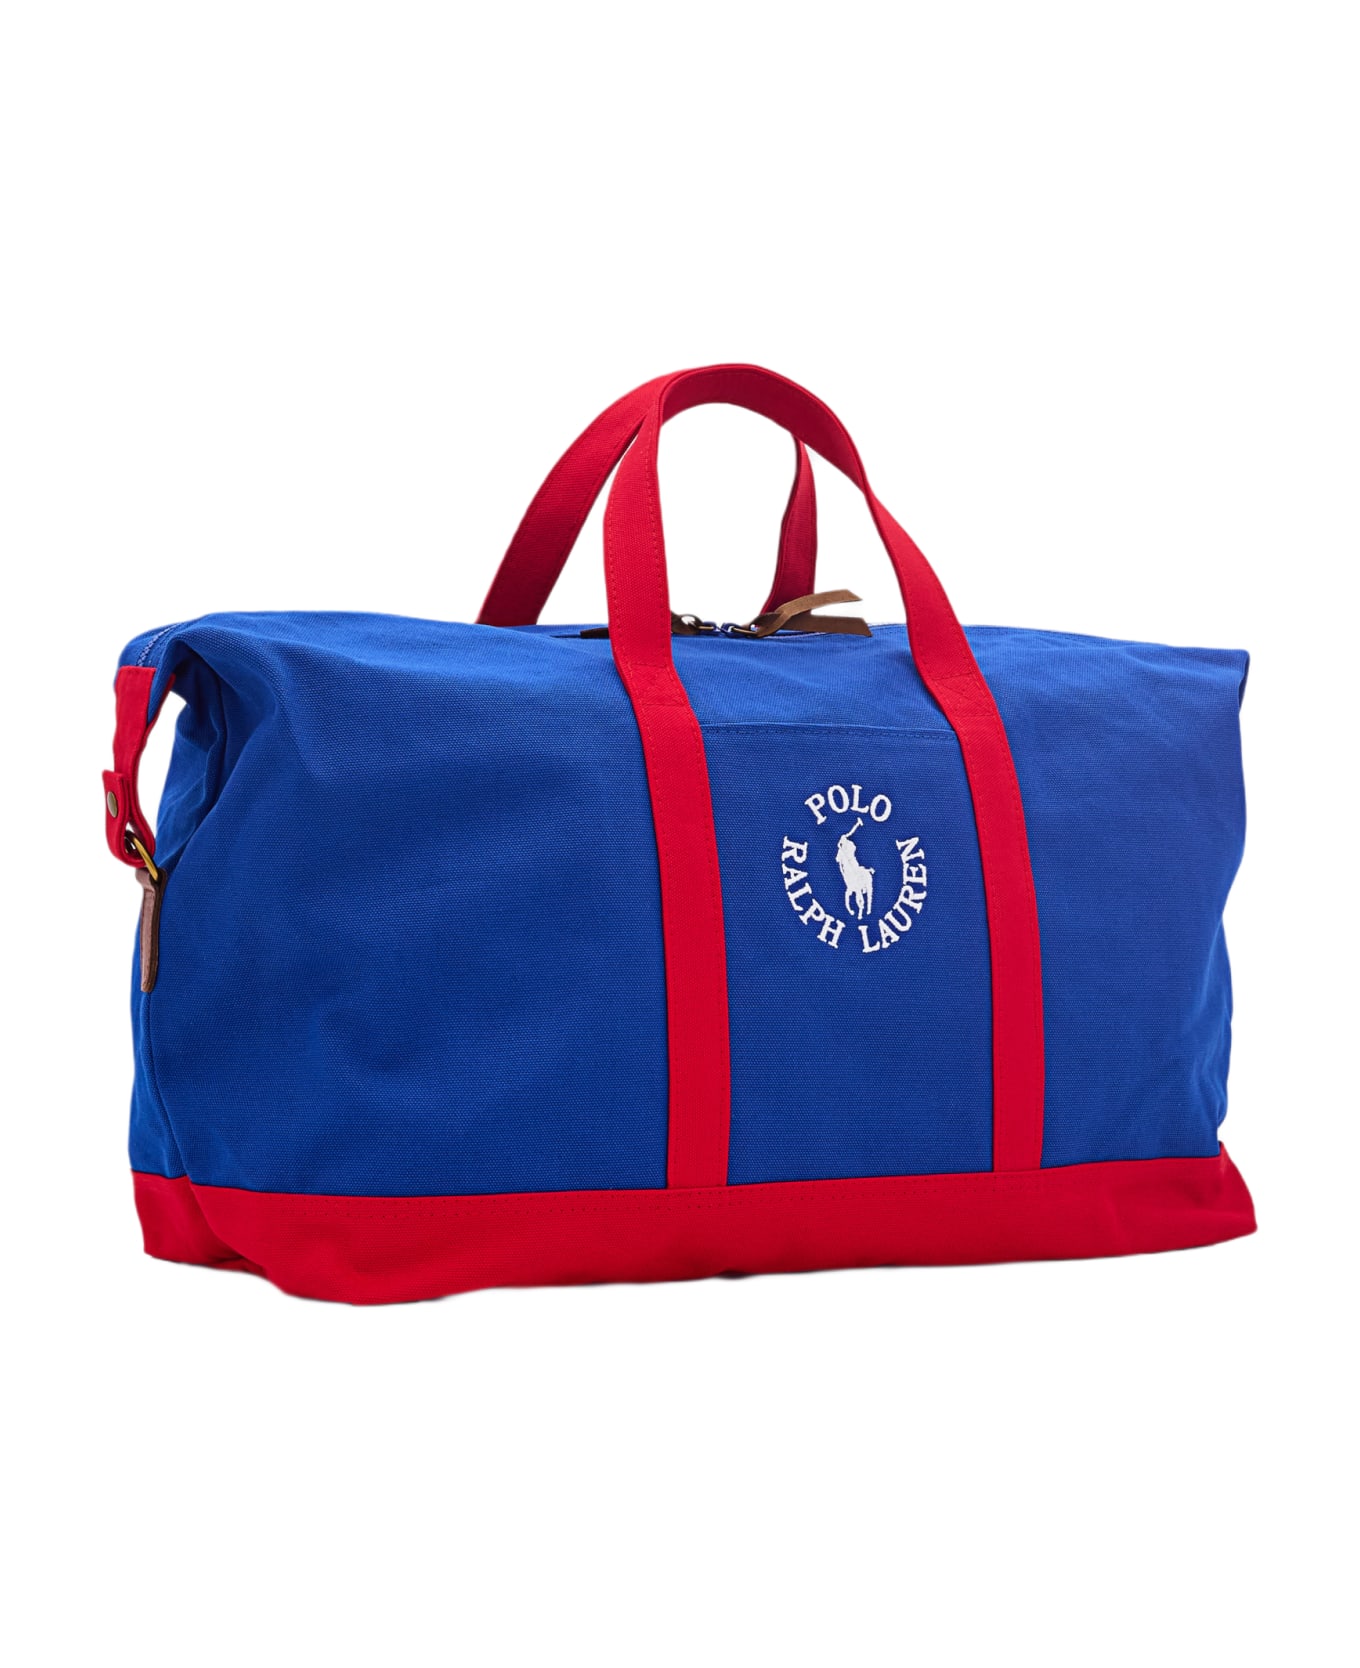 Polo Ralph Lauren Duffle Large Travel Bag - Blue